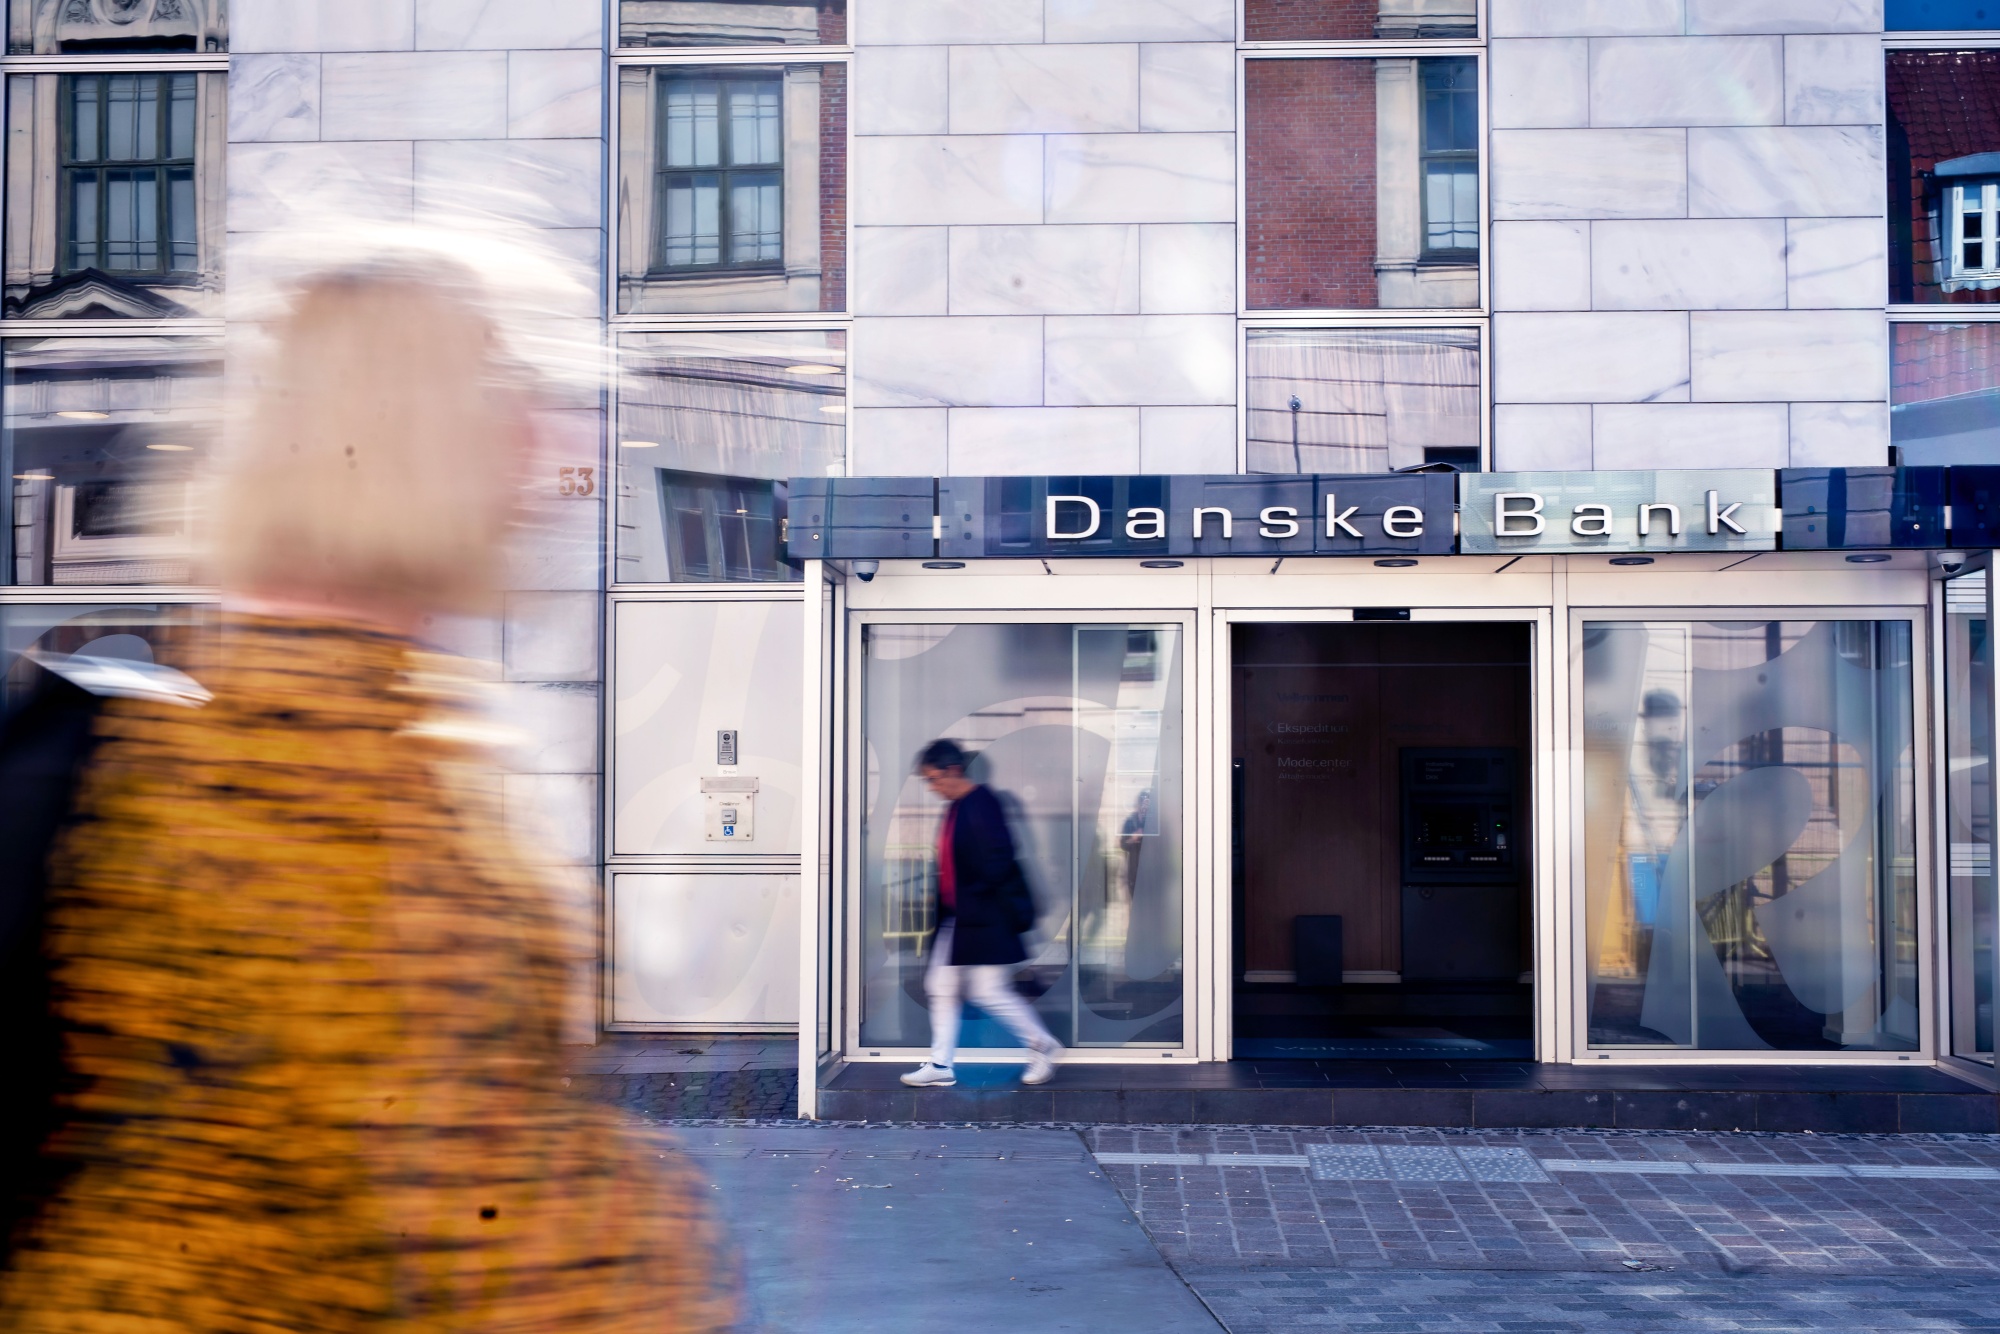 Pedestrians pass a Danske Bank A/S bank branch in Aalborg, Denmark.